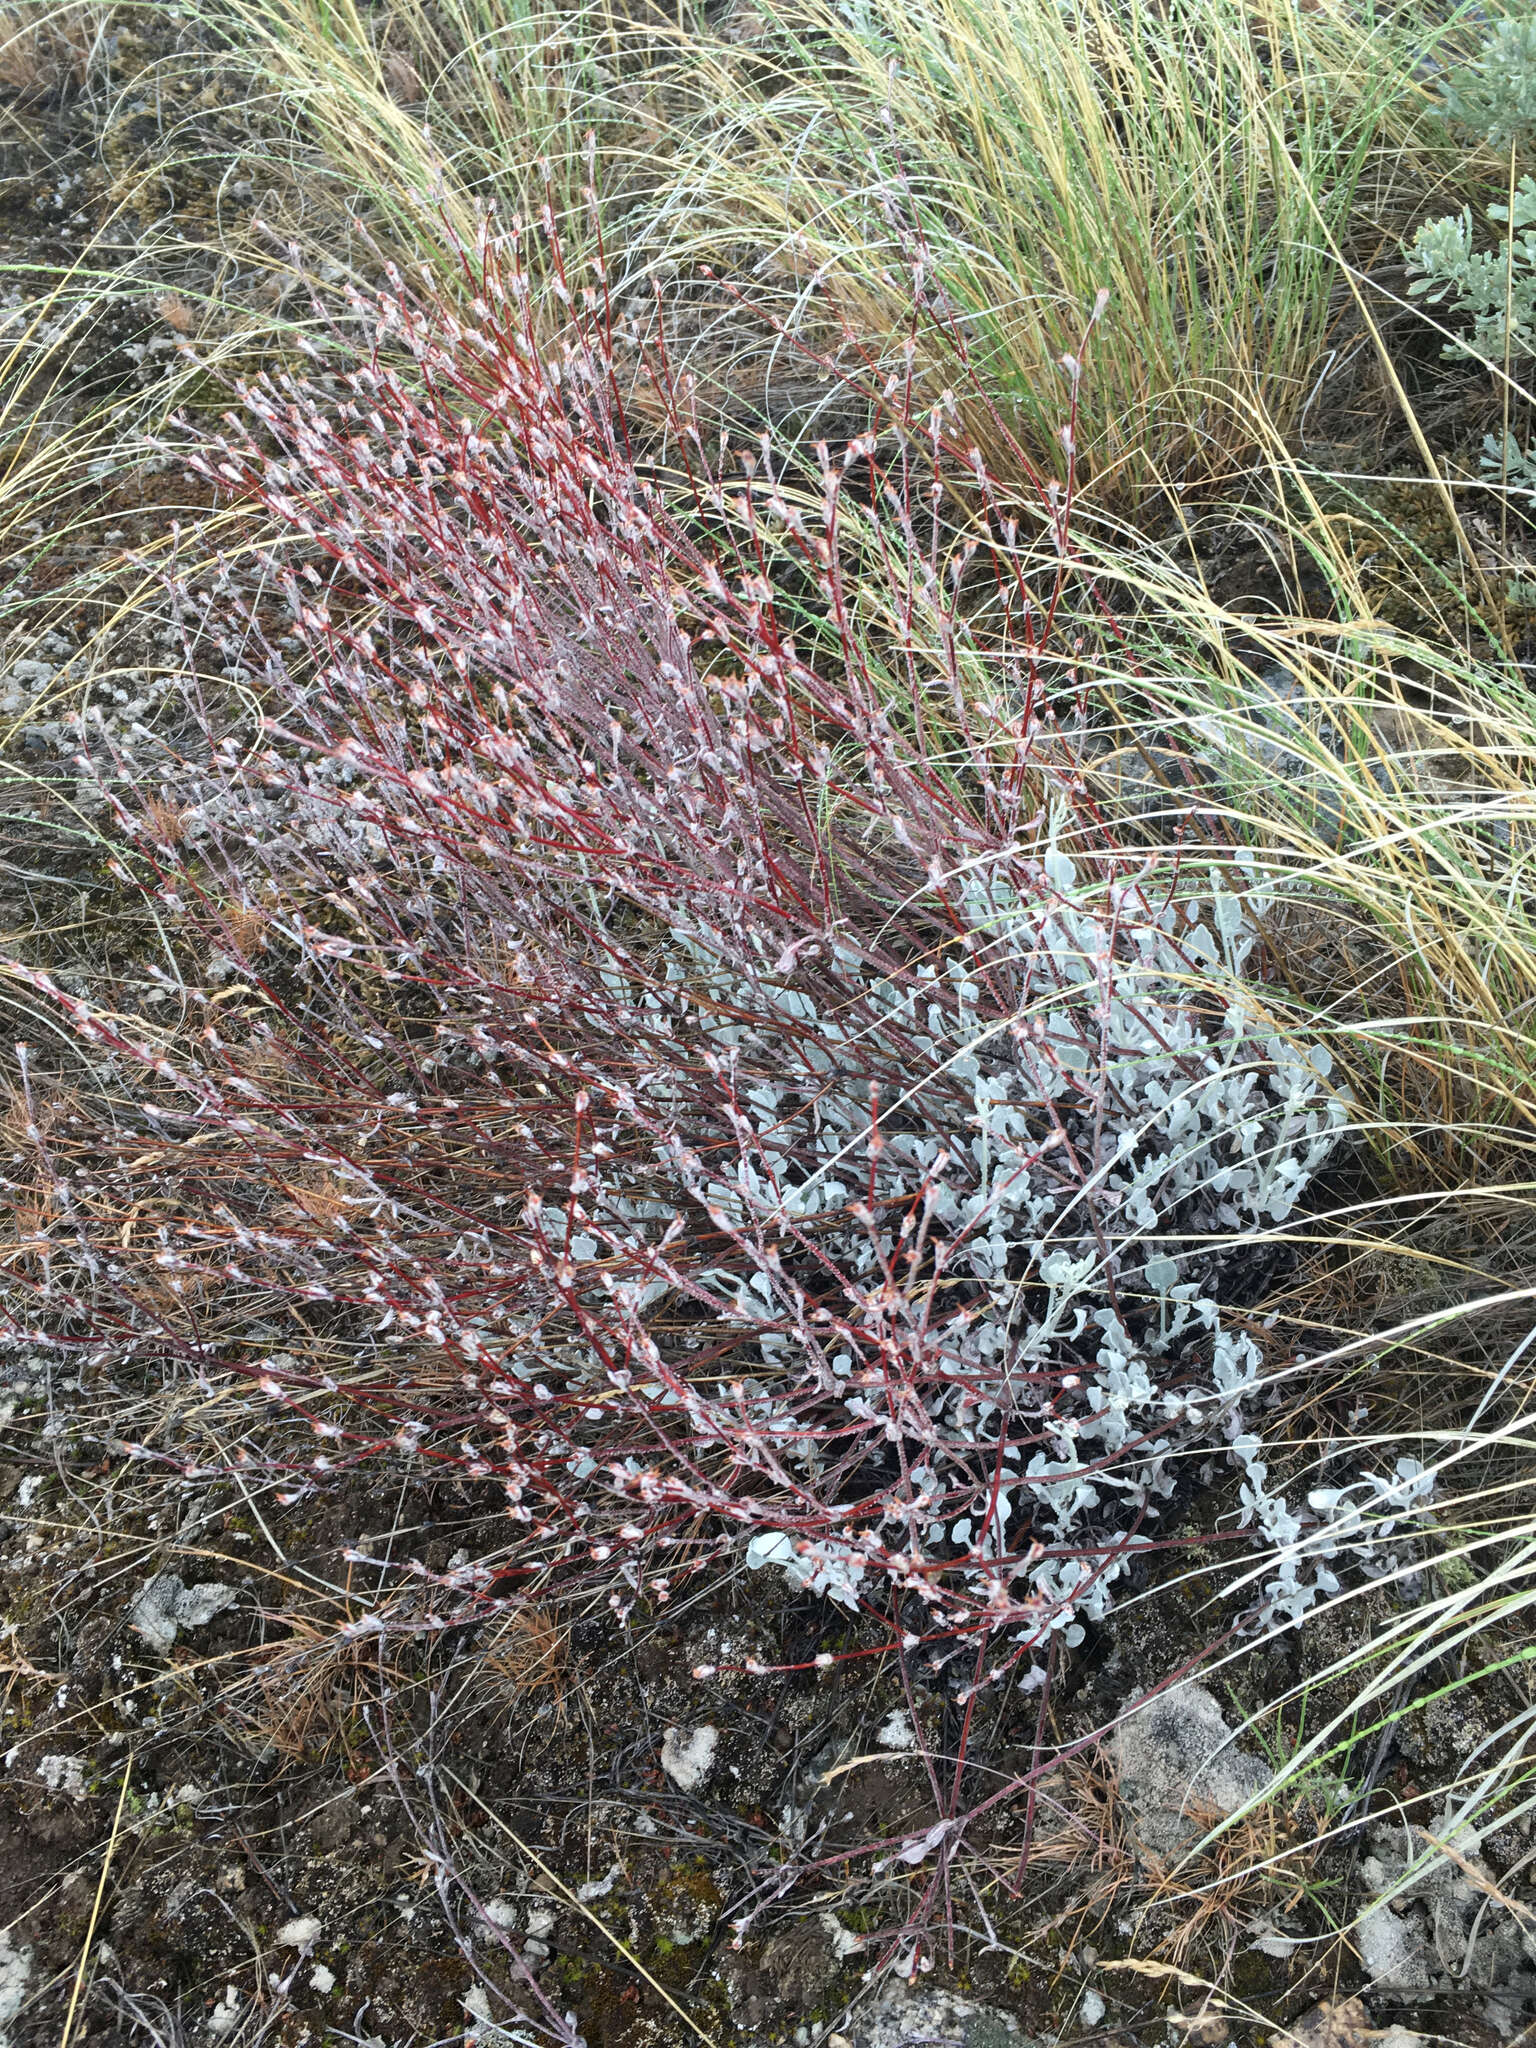 Image of snow buckwheat